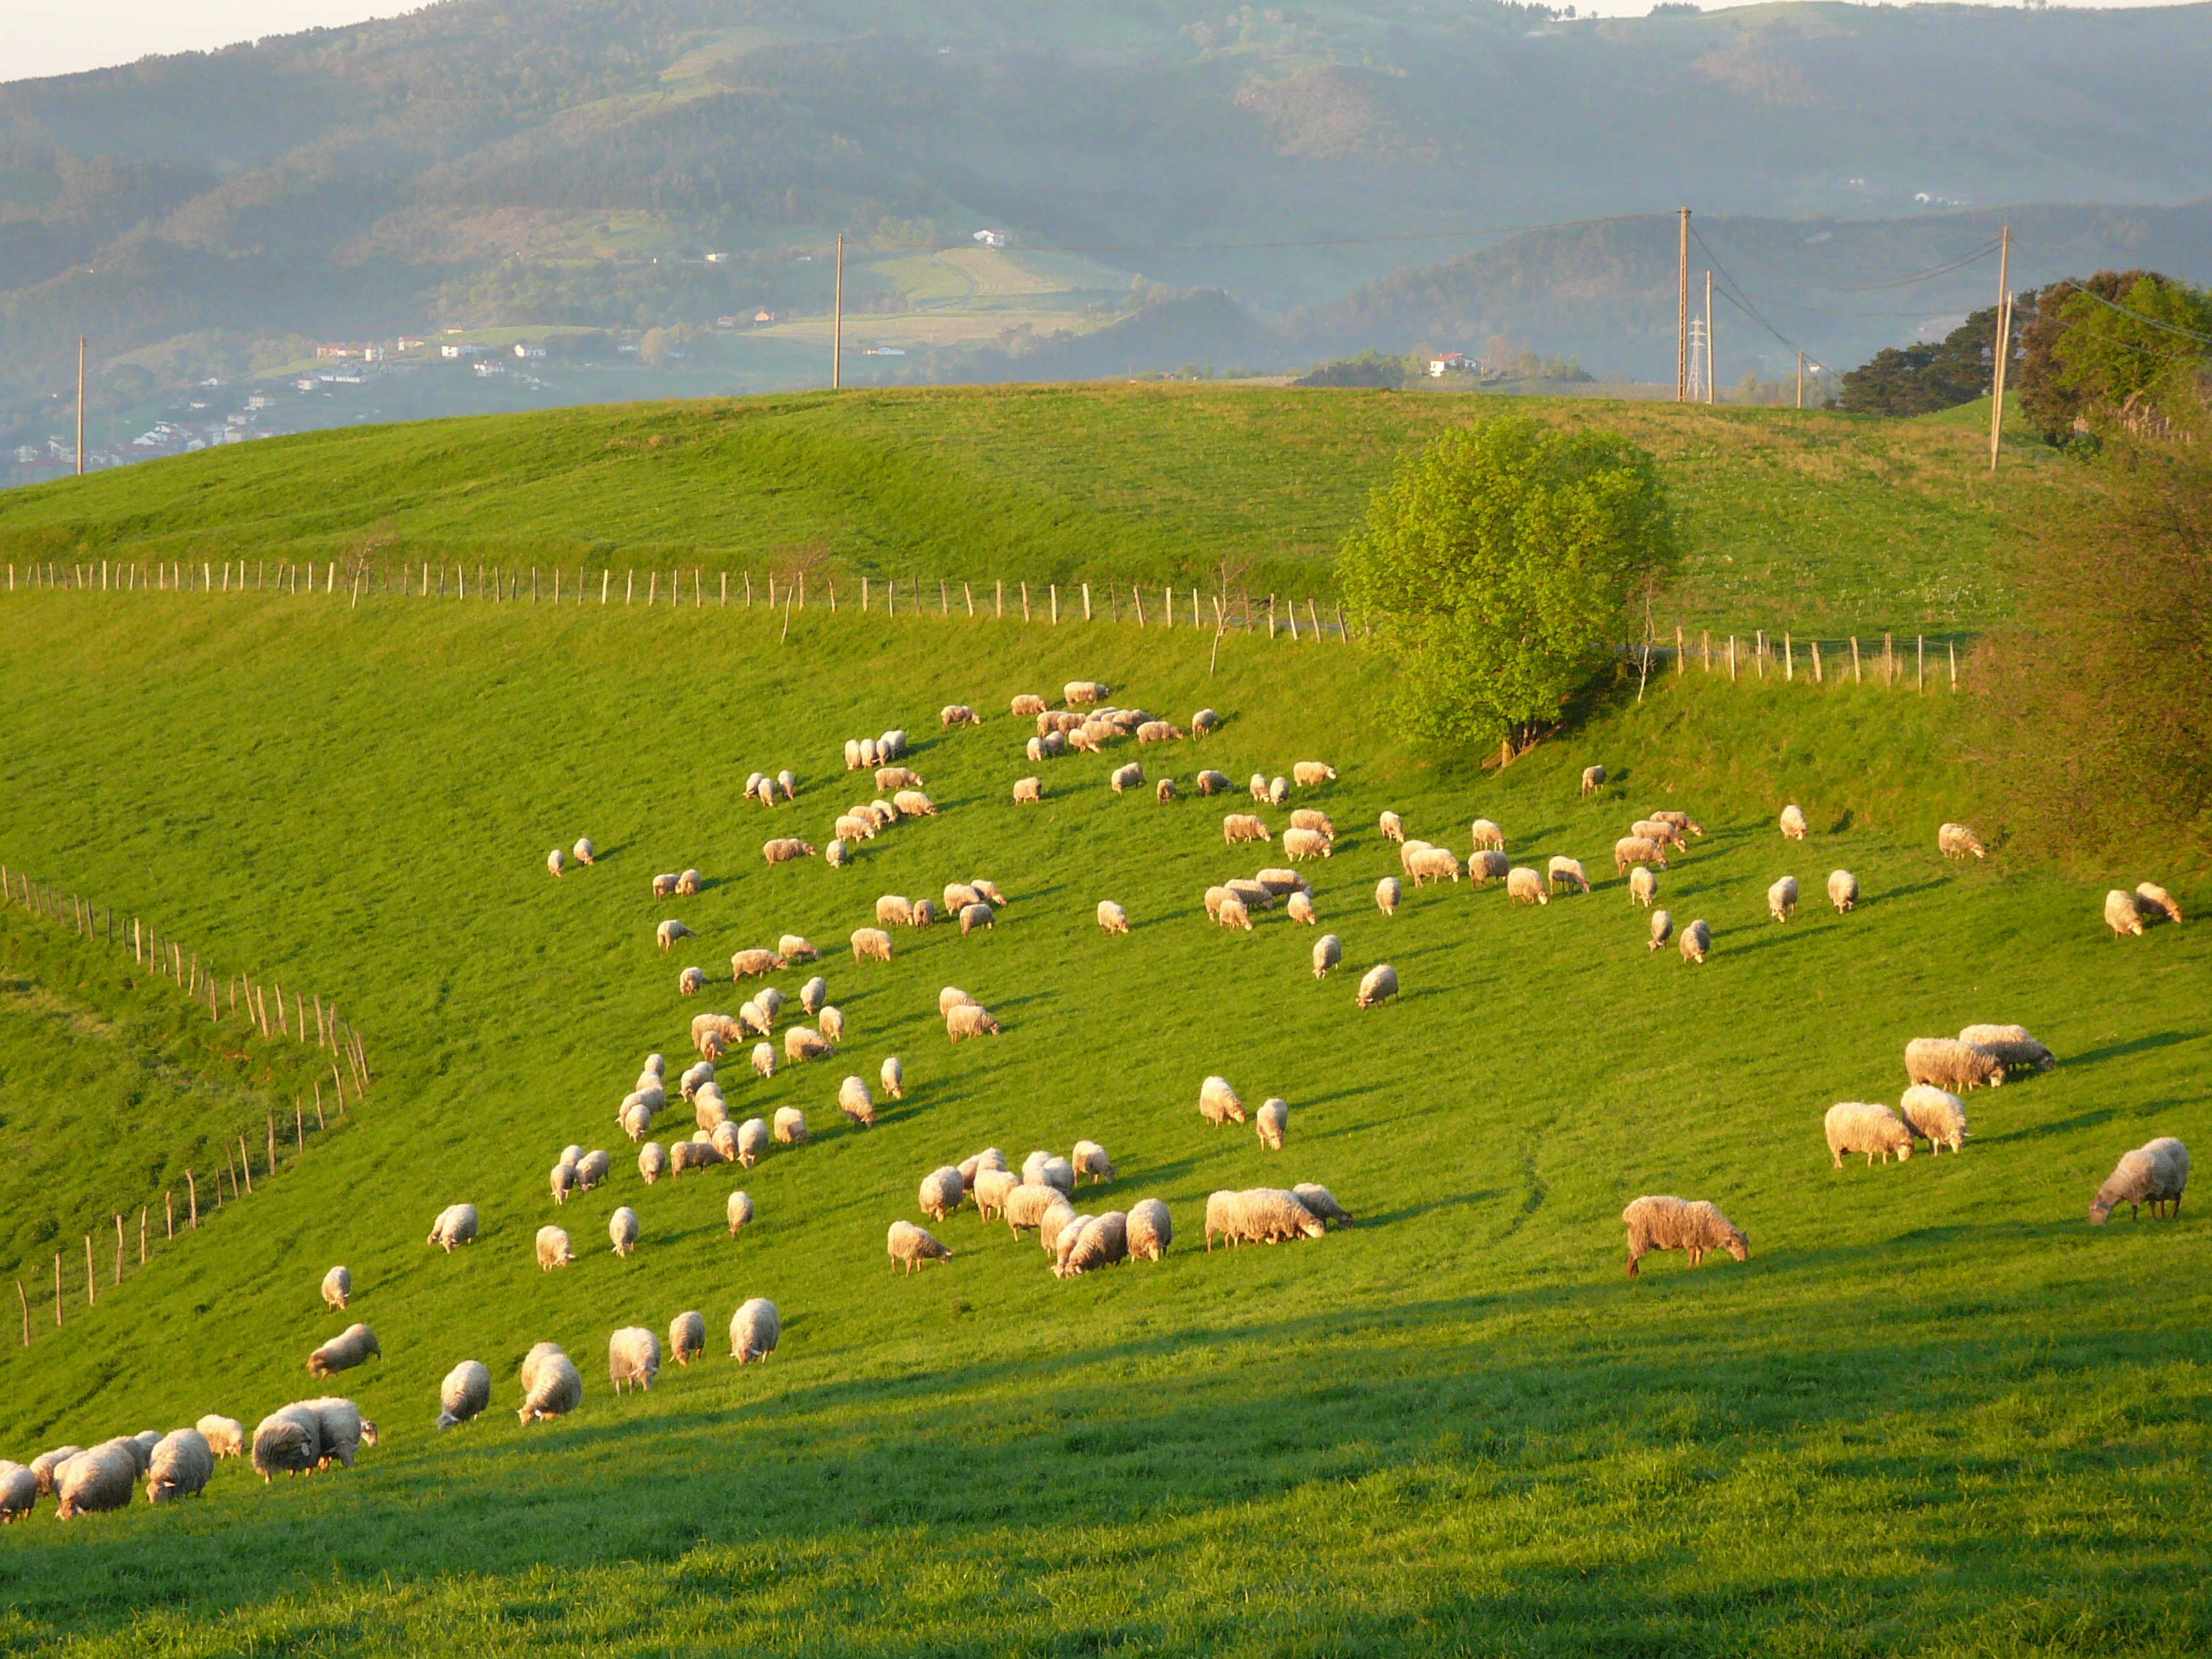 Rebao ovino de raza Latxa pastoreando